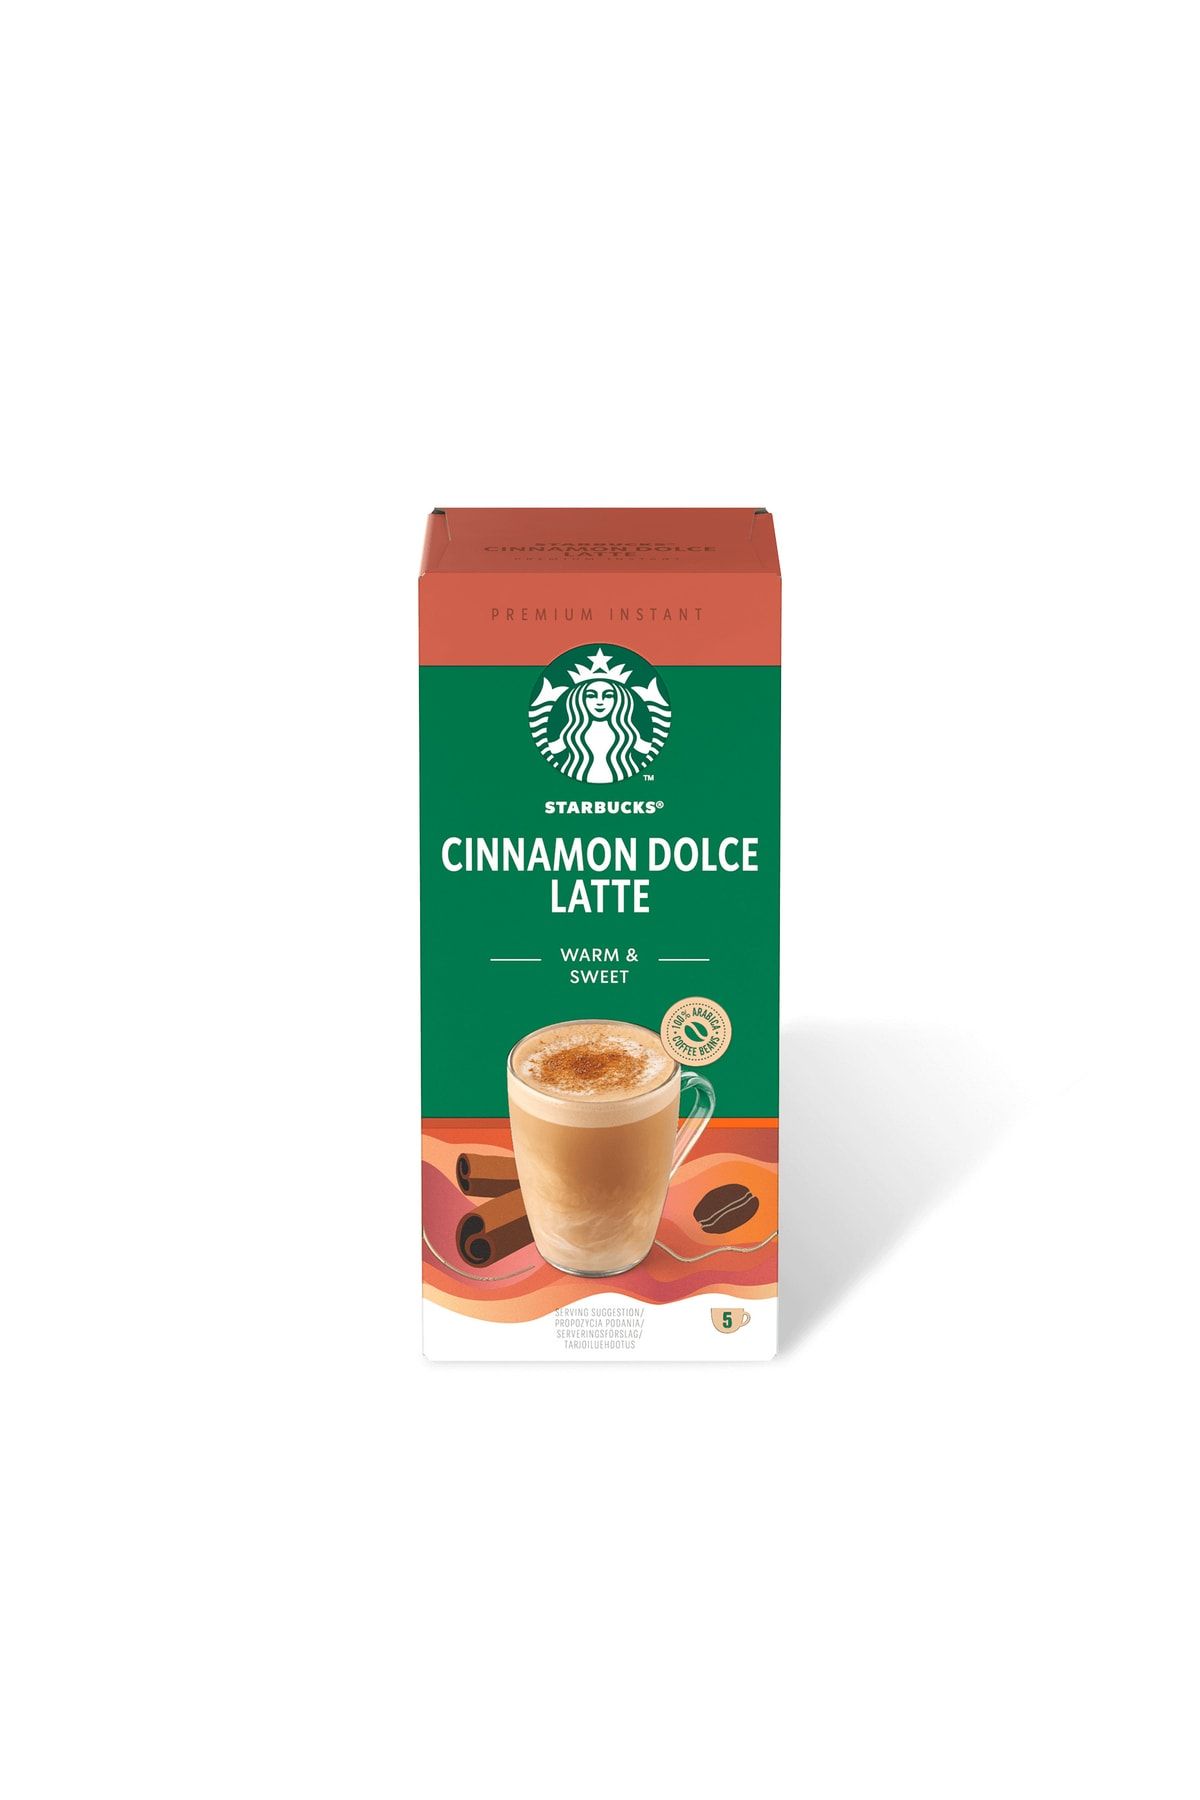 Starbucks Cinnamon Dolce Latte Premium Kahve Karışımı 4x23g Paket